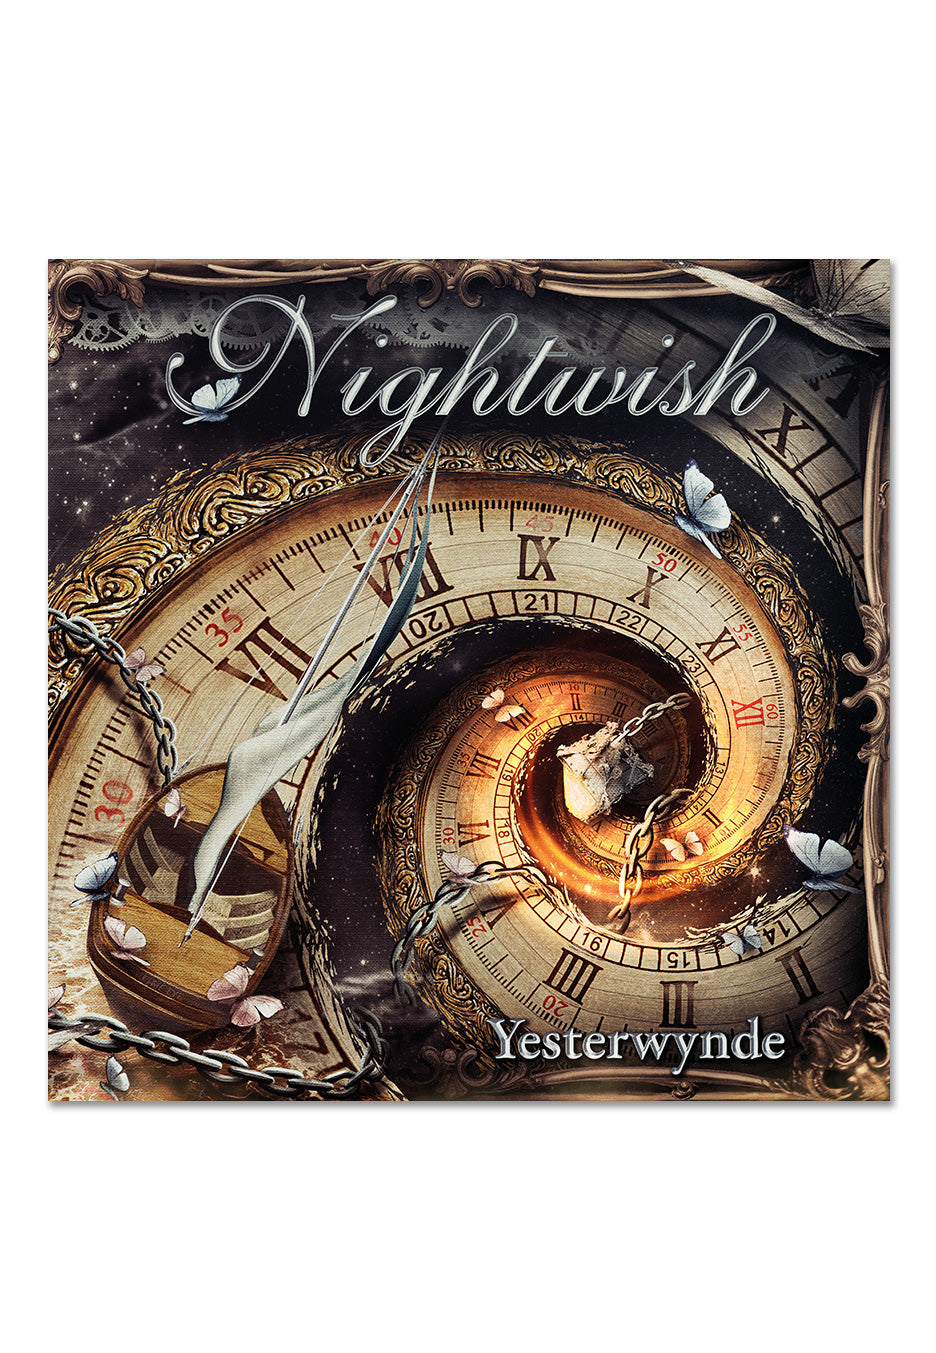 Nightwish - Yesterwynde Ltd. Deluxe Box - Vinyl Box Set